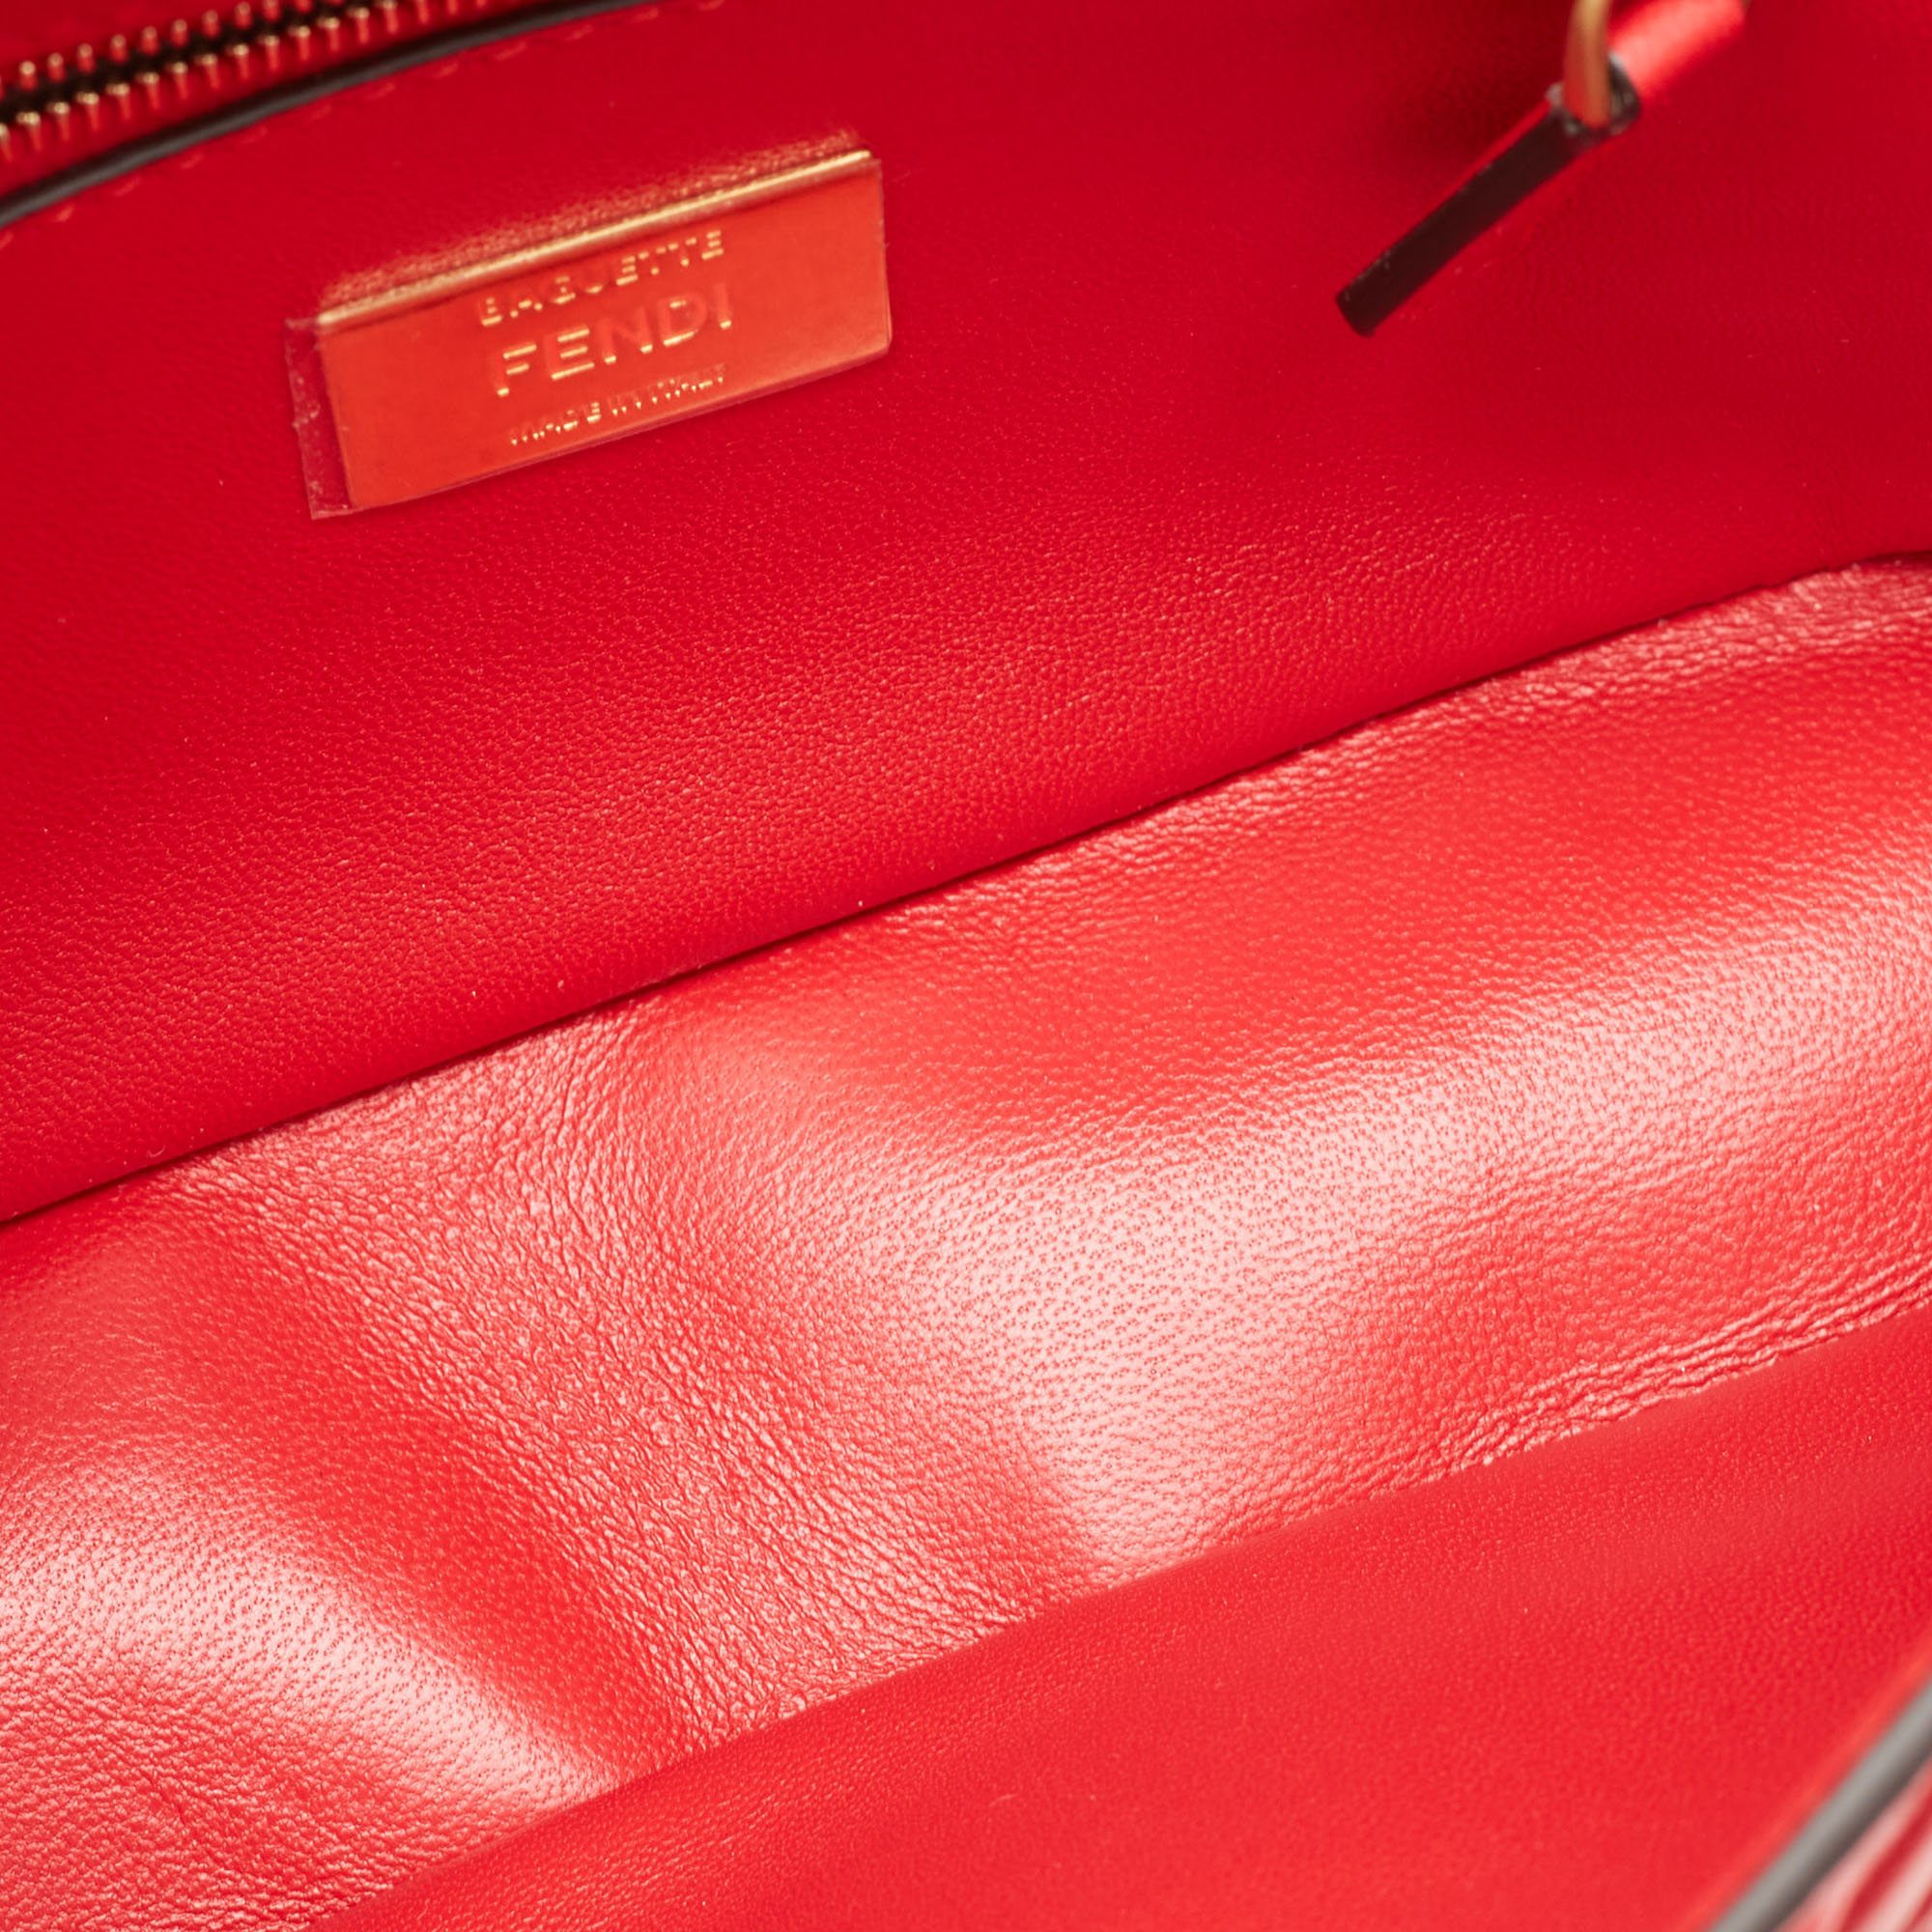 Fendi Red FF Embossed Leather Midi Chain Baguette Bag